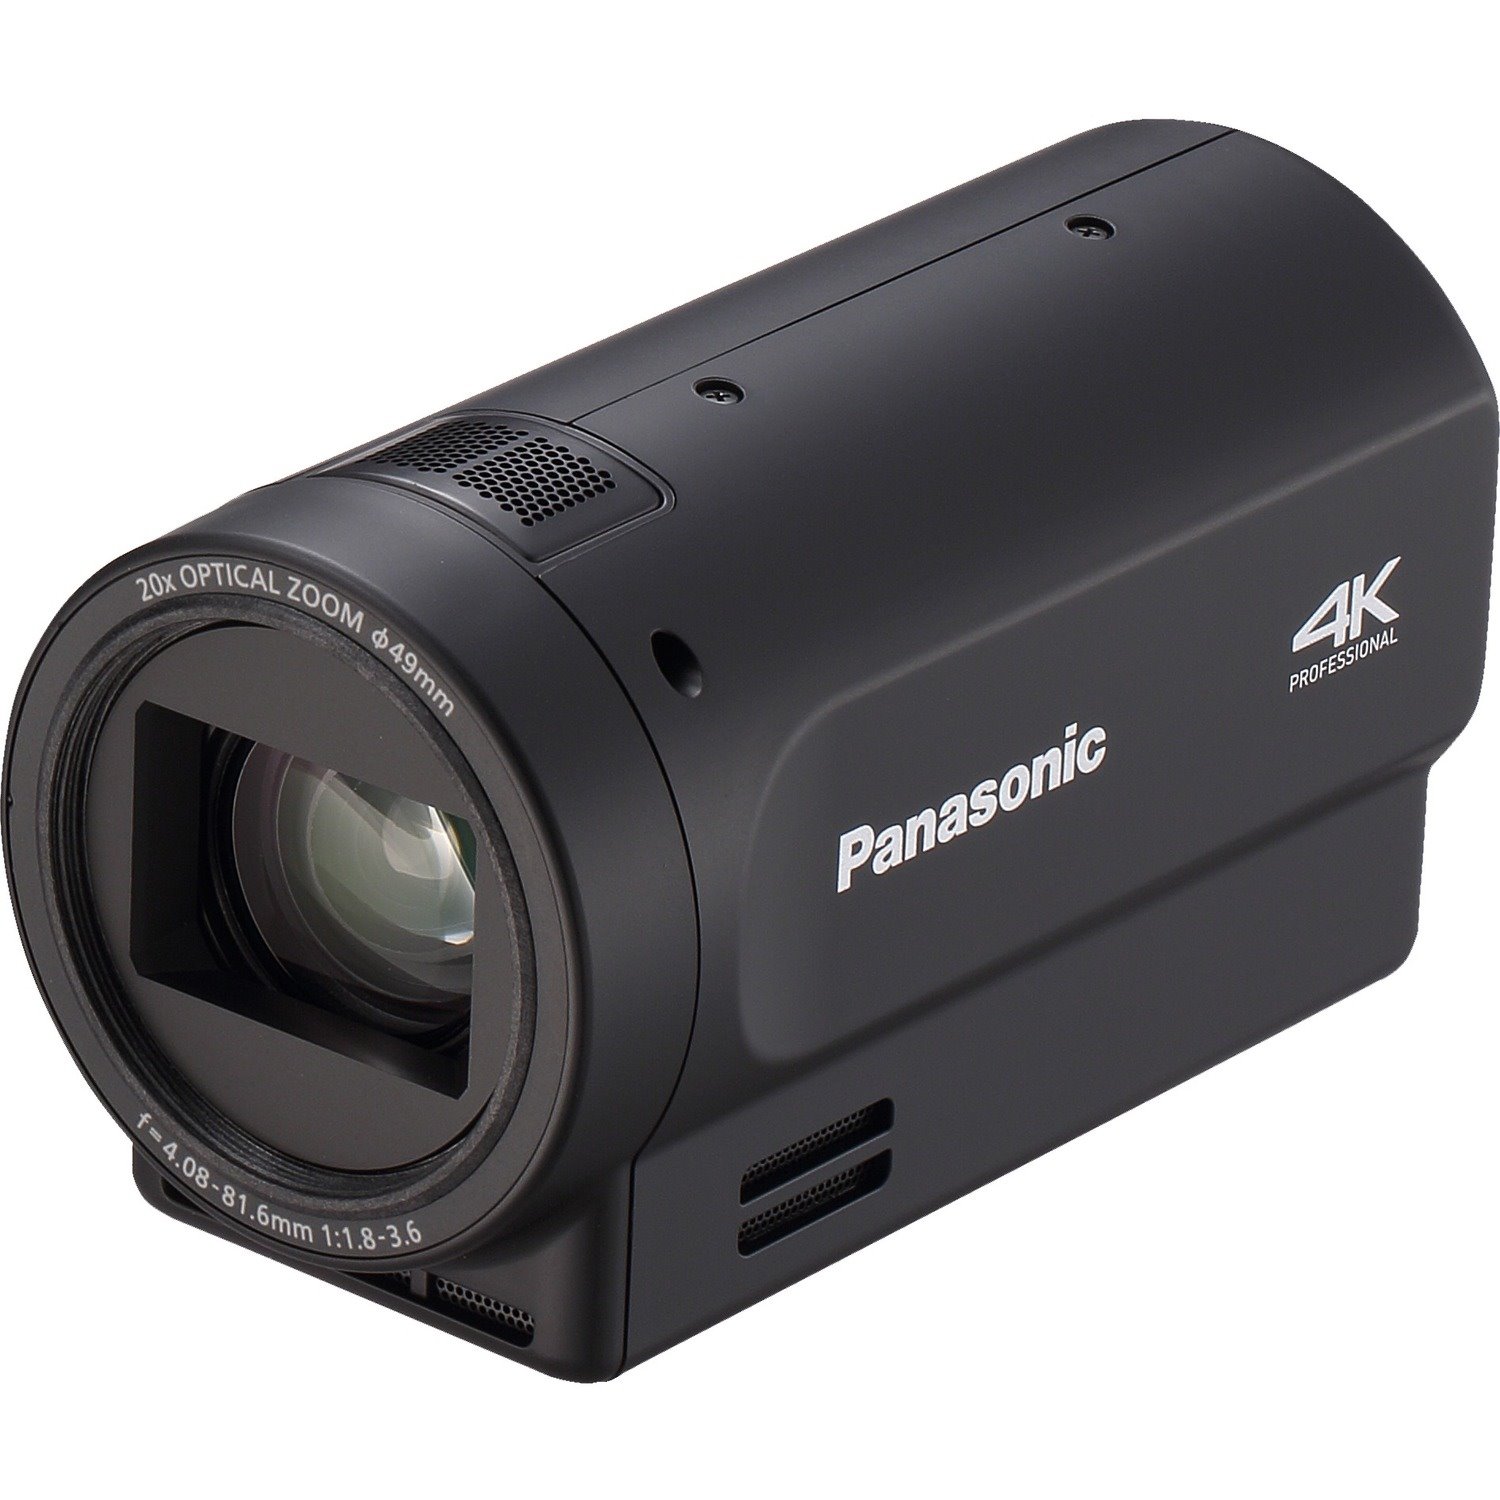 Panasonic AG-UCK20GJ Digital Camcorder - MOS - 4K